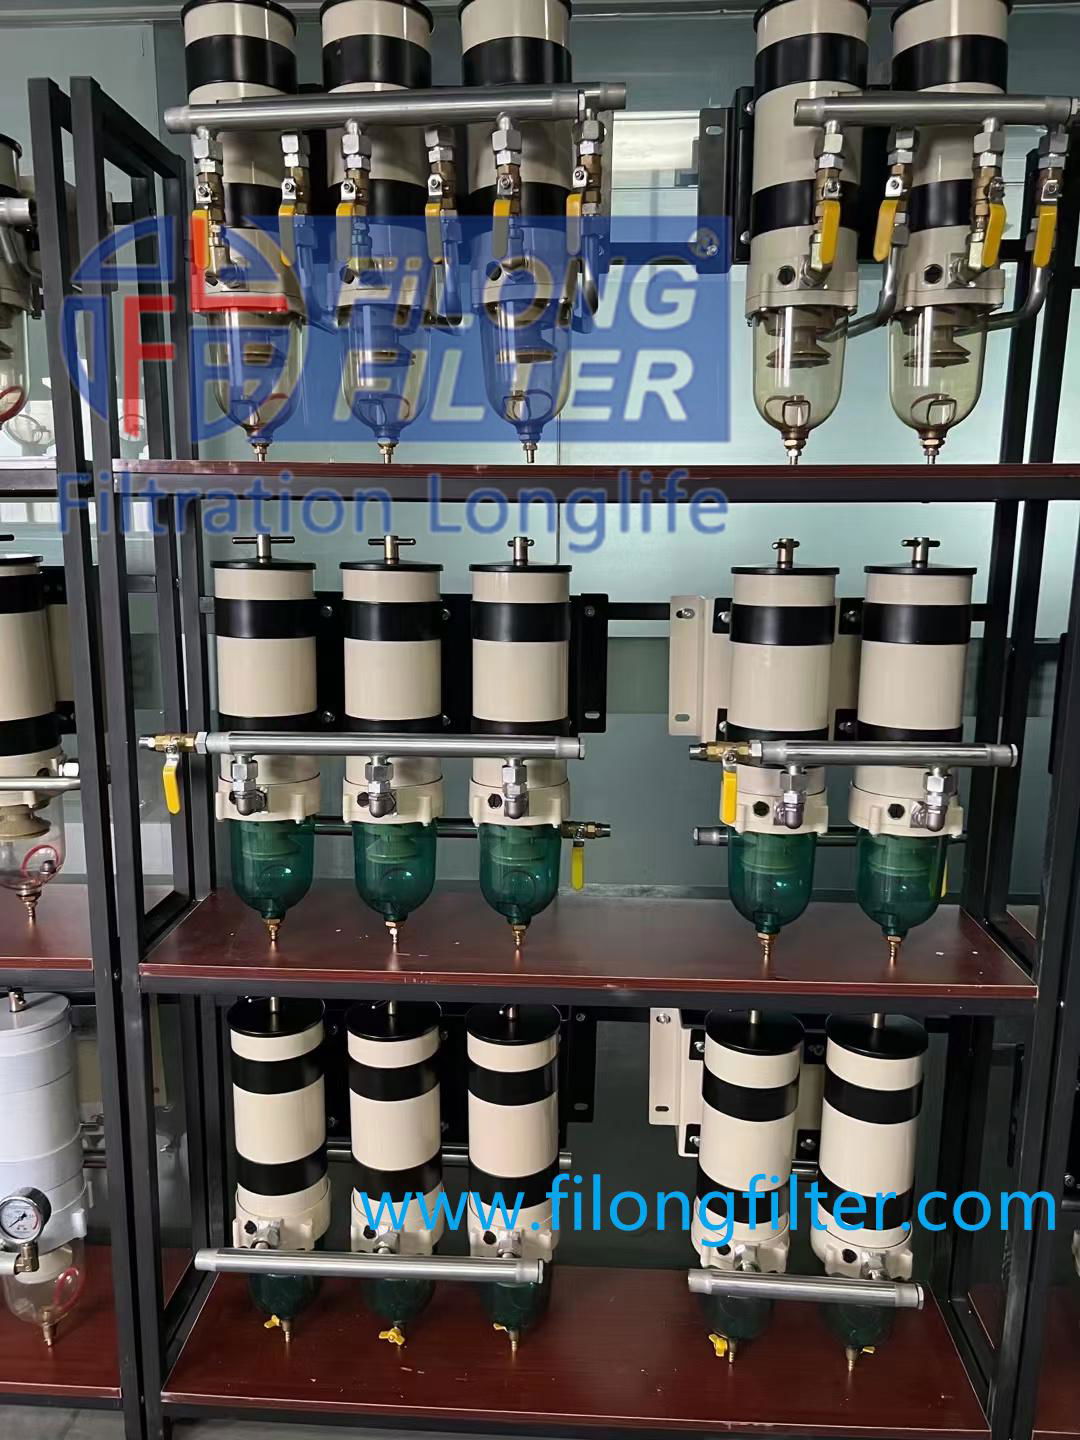 Filter Assembly supplier from FILONG Manufacturer.